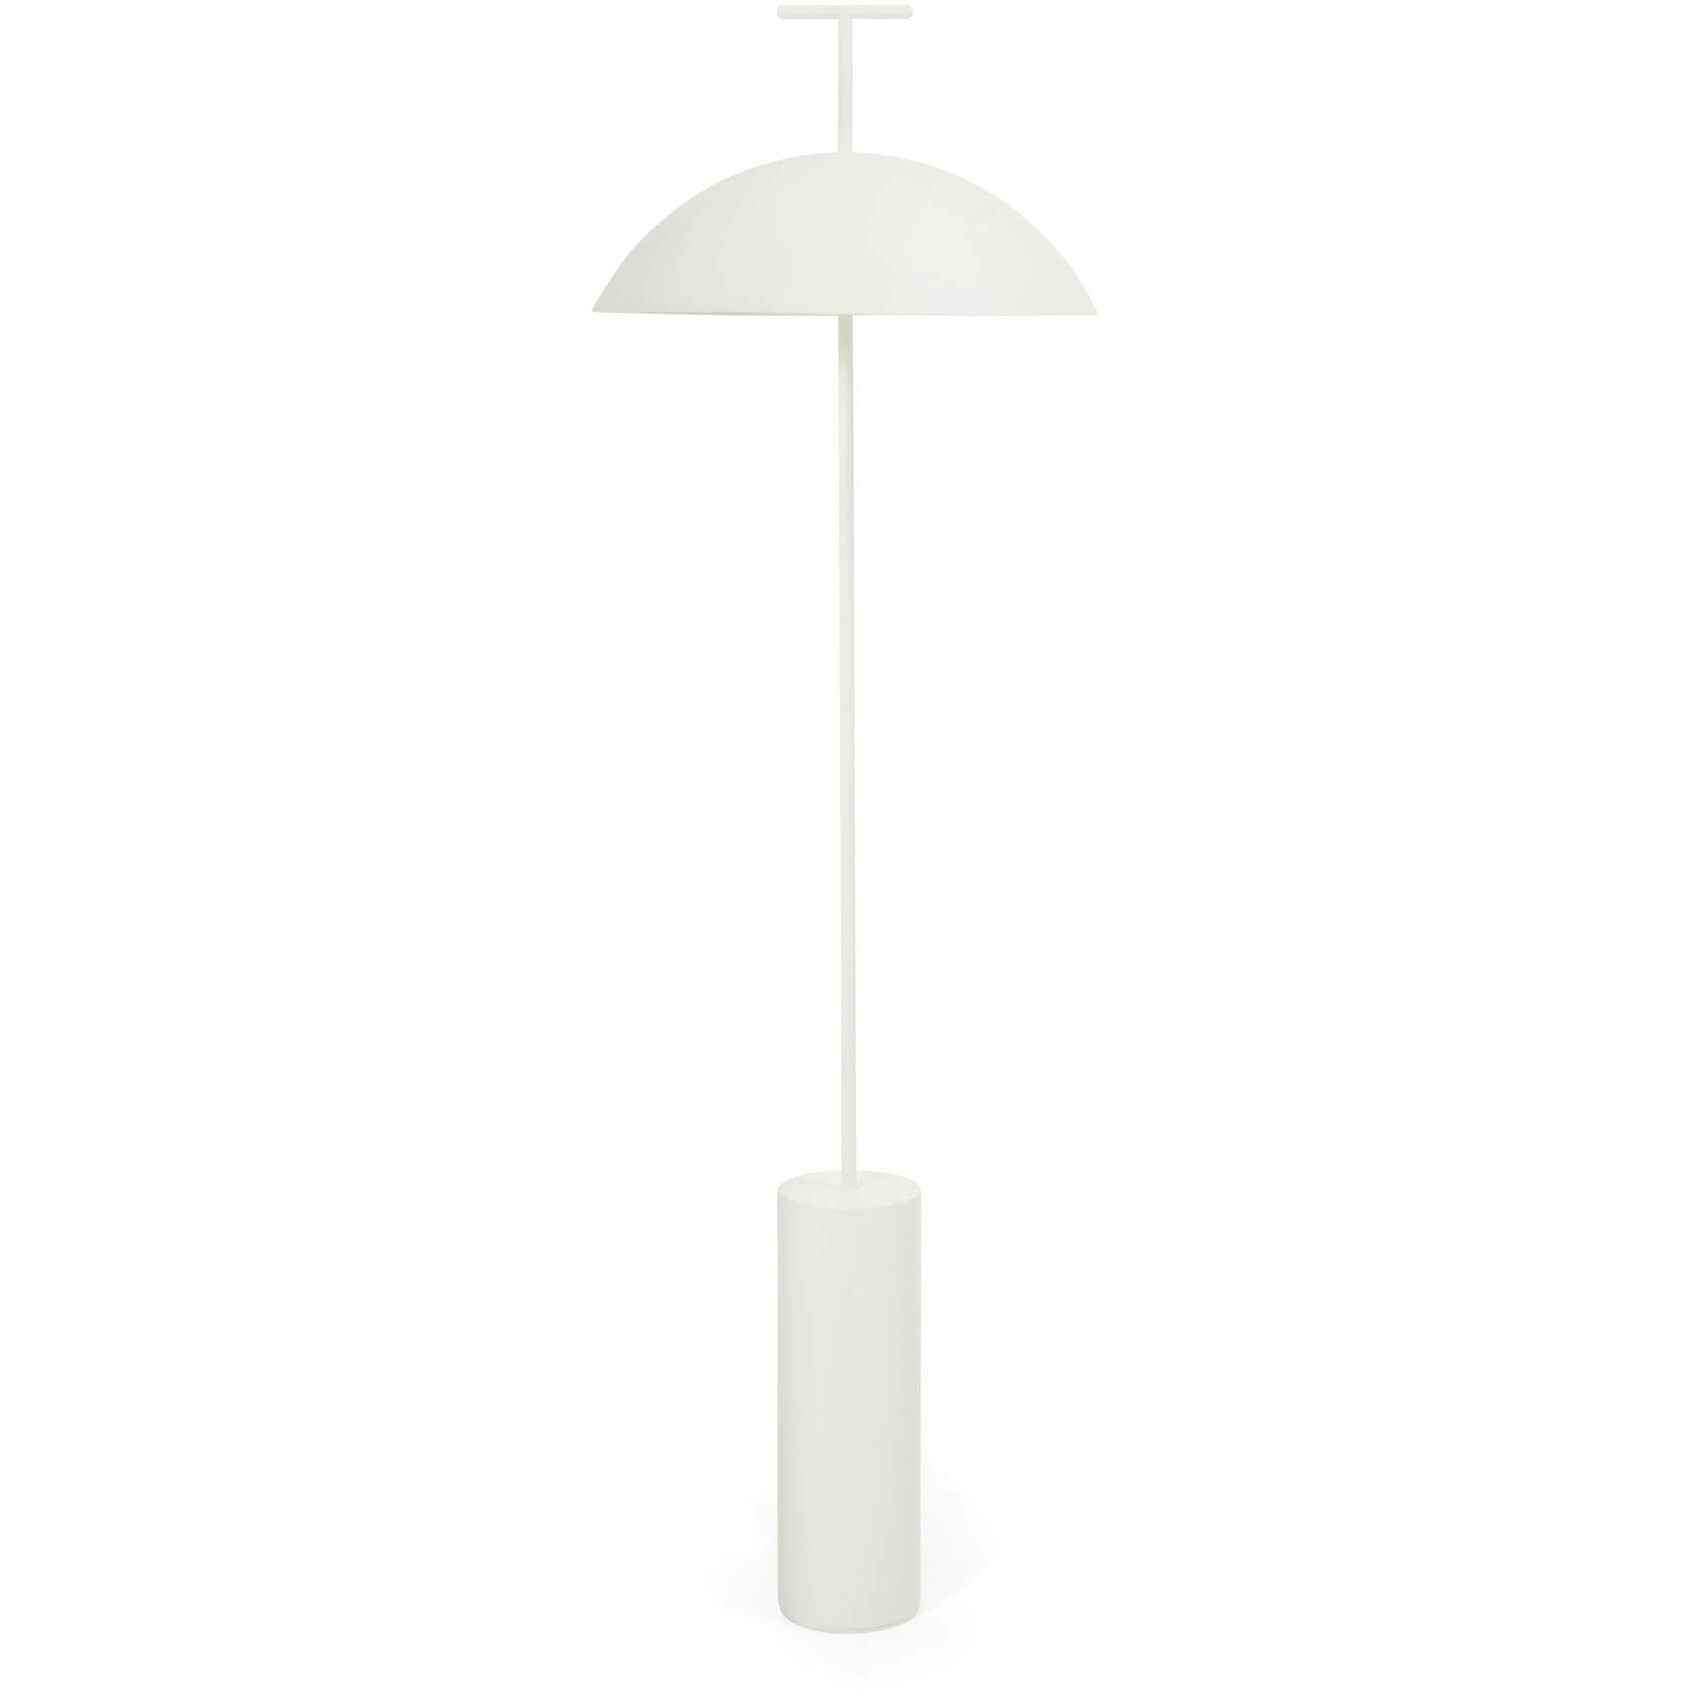 Design House Stockholm Block Lamp, white cord